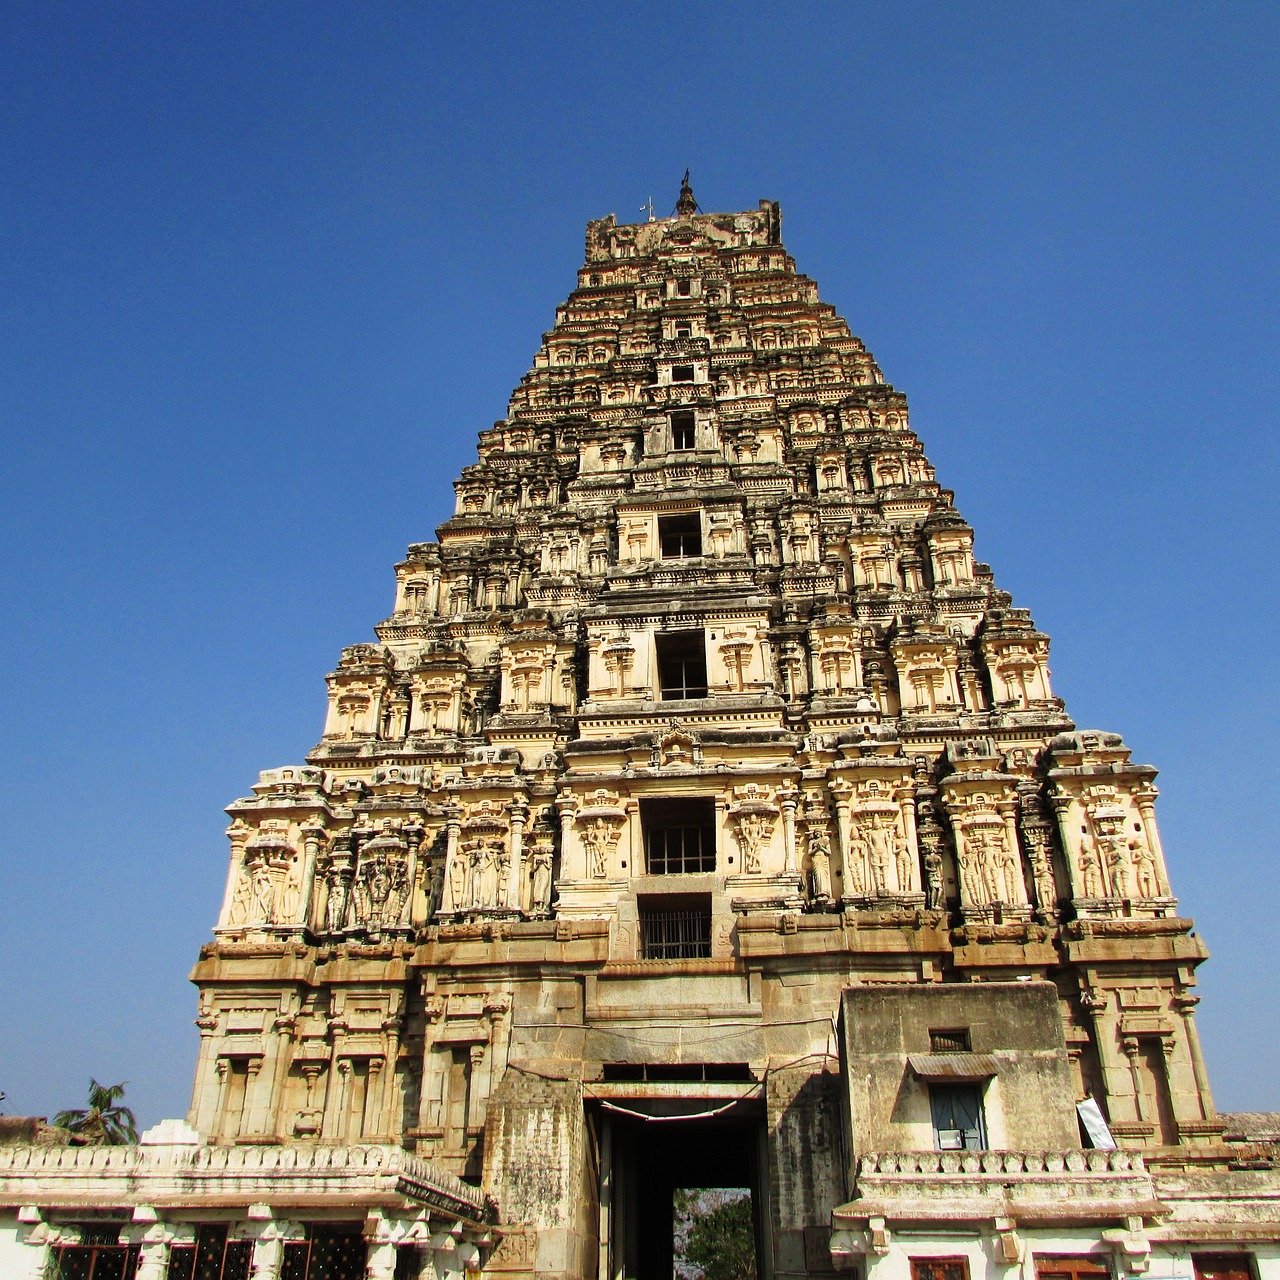 The ruins of Hampi stand as remnants of the Vijayanagara Empire